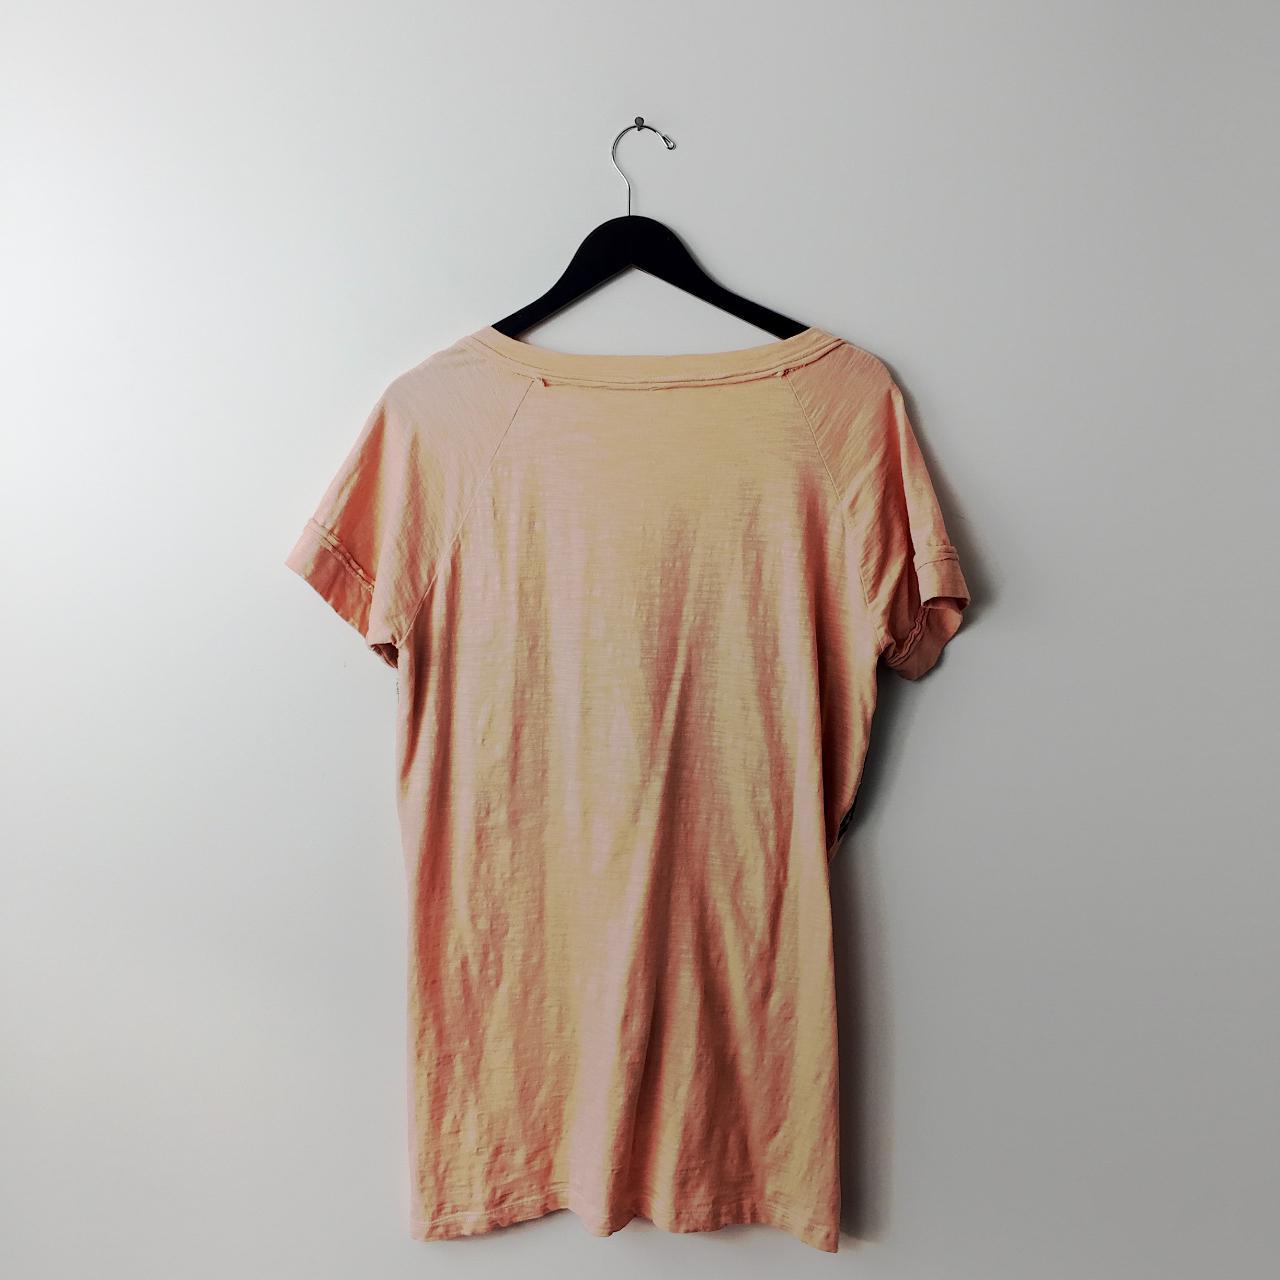 Product Image 4 - Indigo Thread Embroidered Tee Shirt